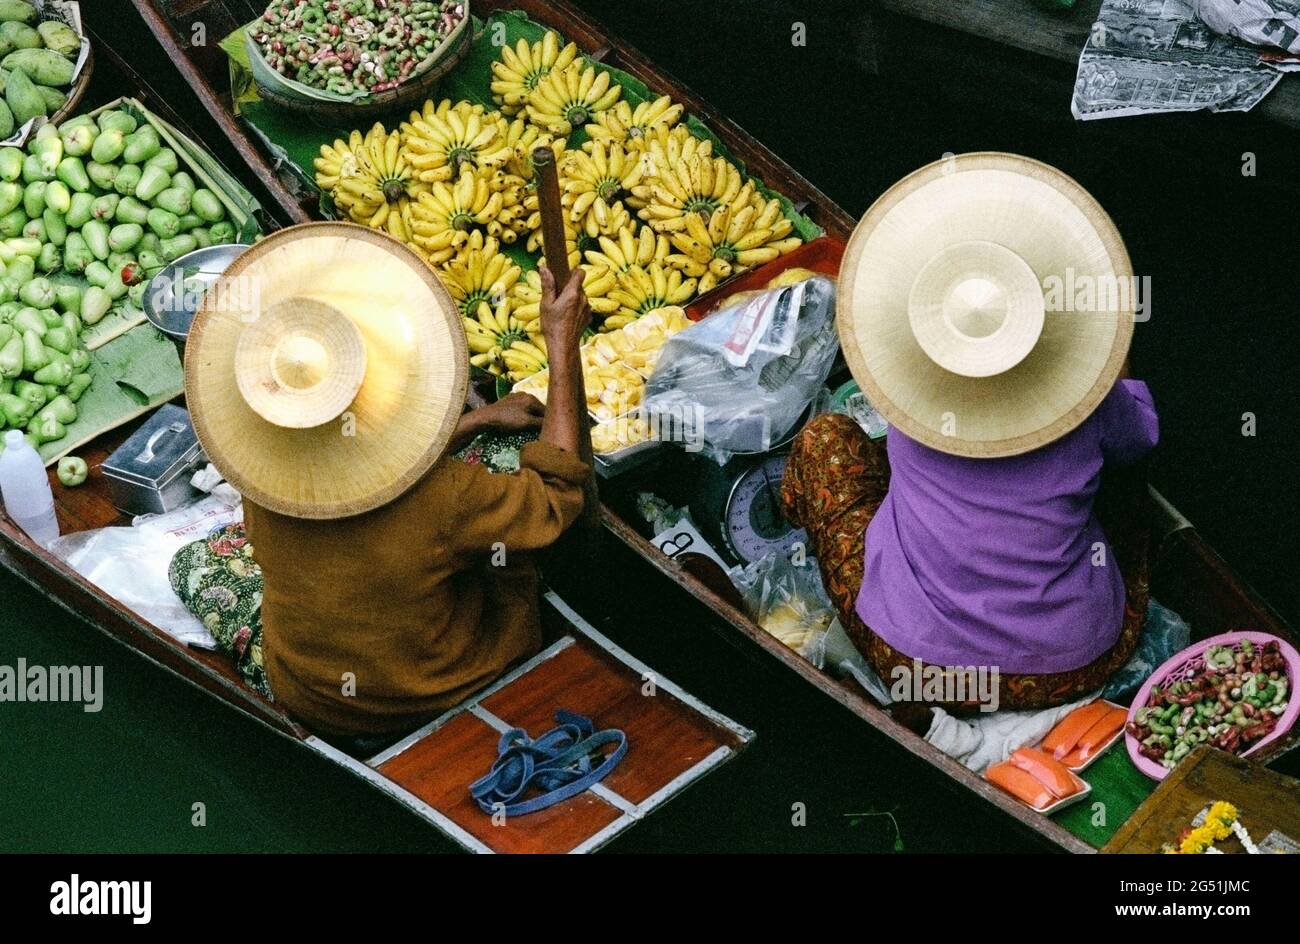 Vista de alto ángulo del mercado flotante, Damnoen Saduak, Tailandia, sudeste asiático Foto de stock